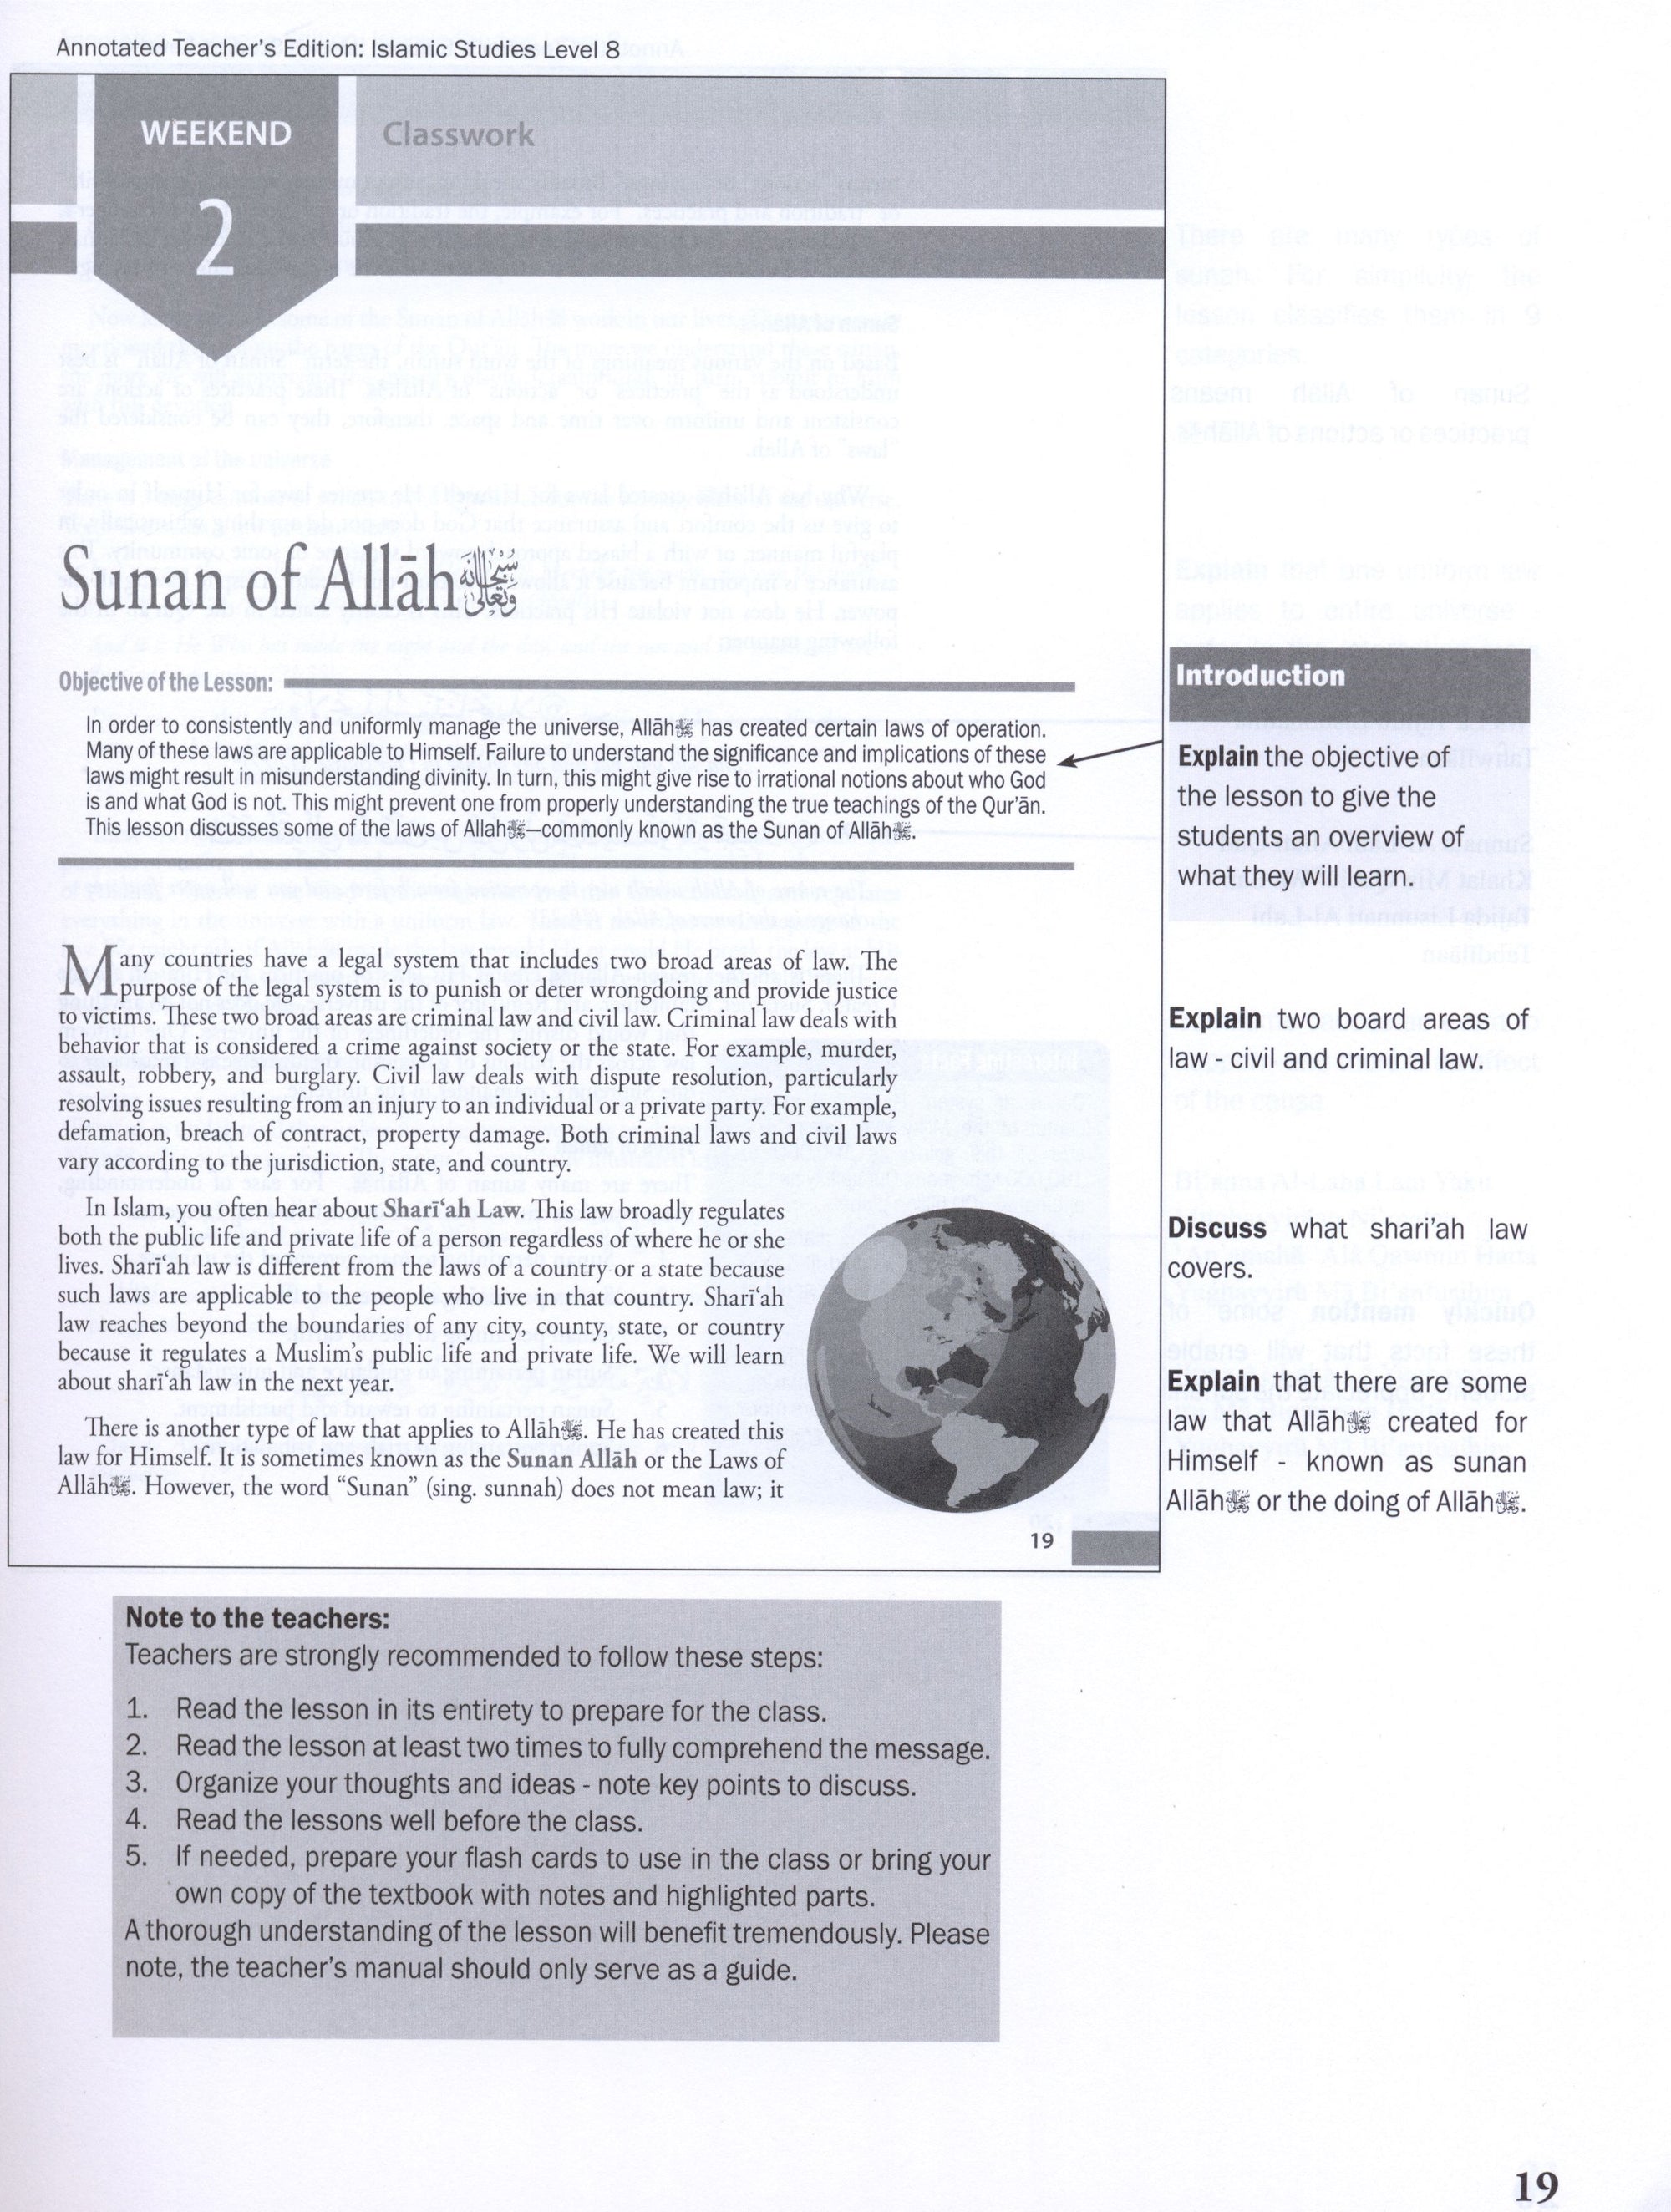 Weekend Learning Islamic Studies Teacher Manual Level 8